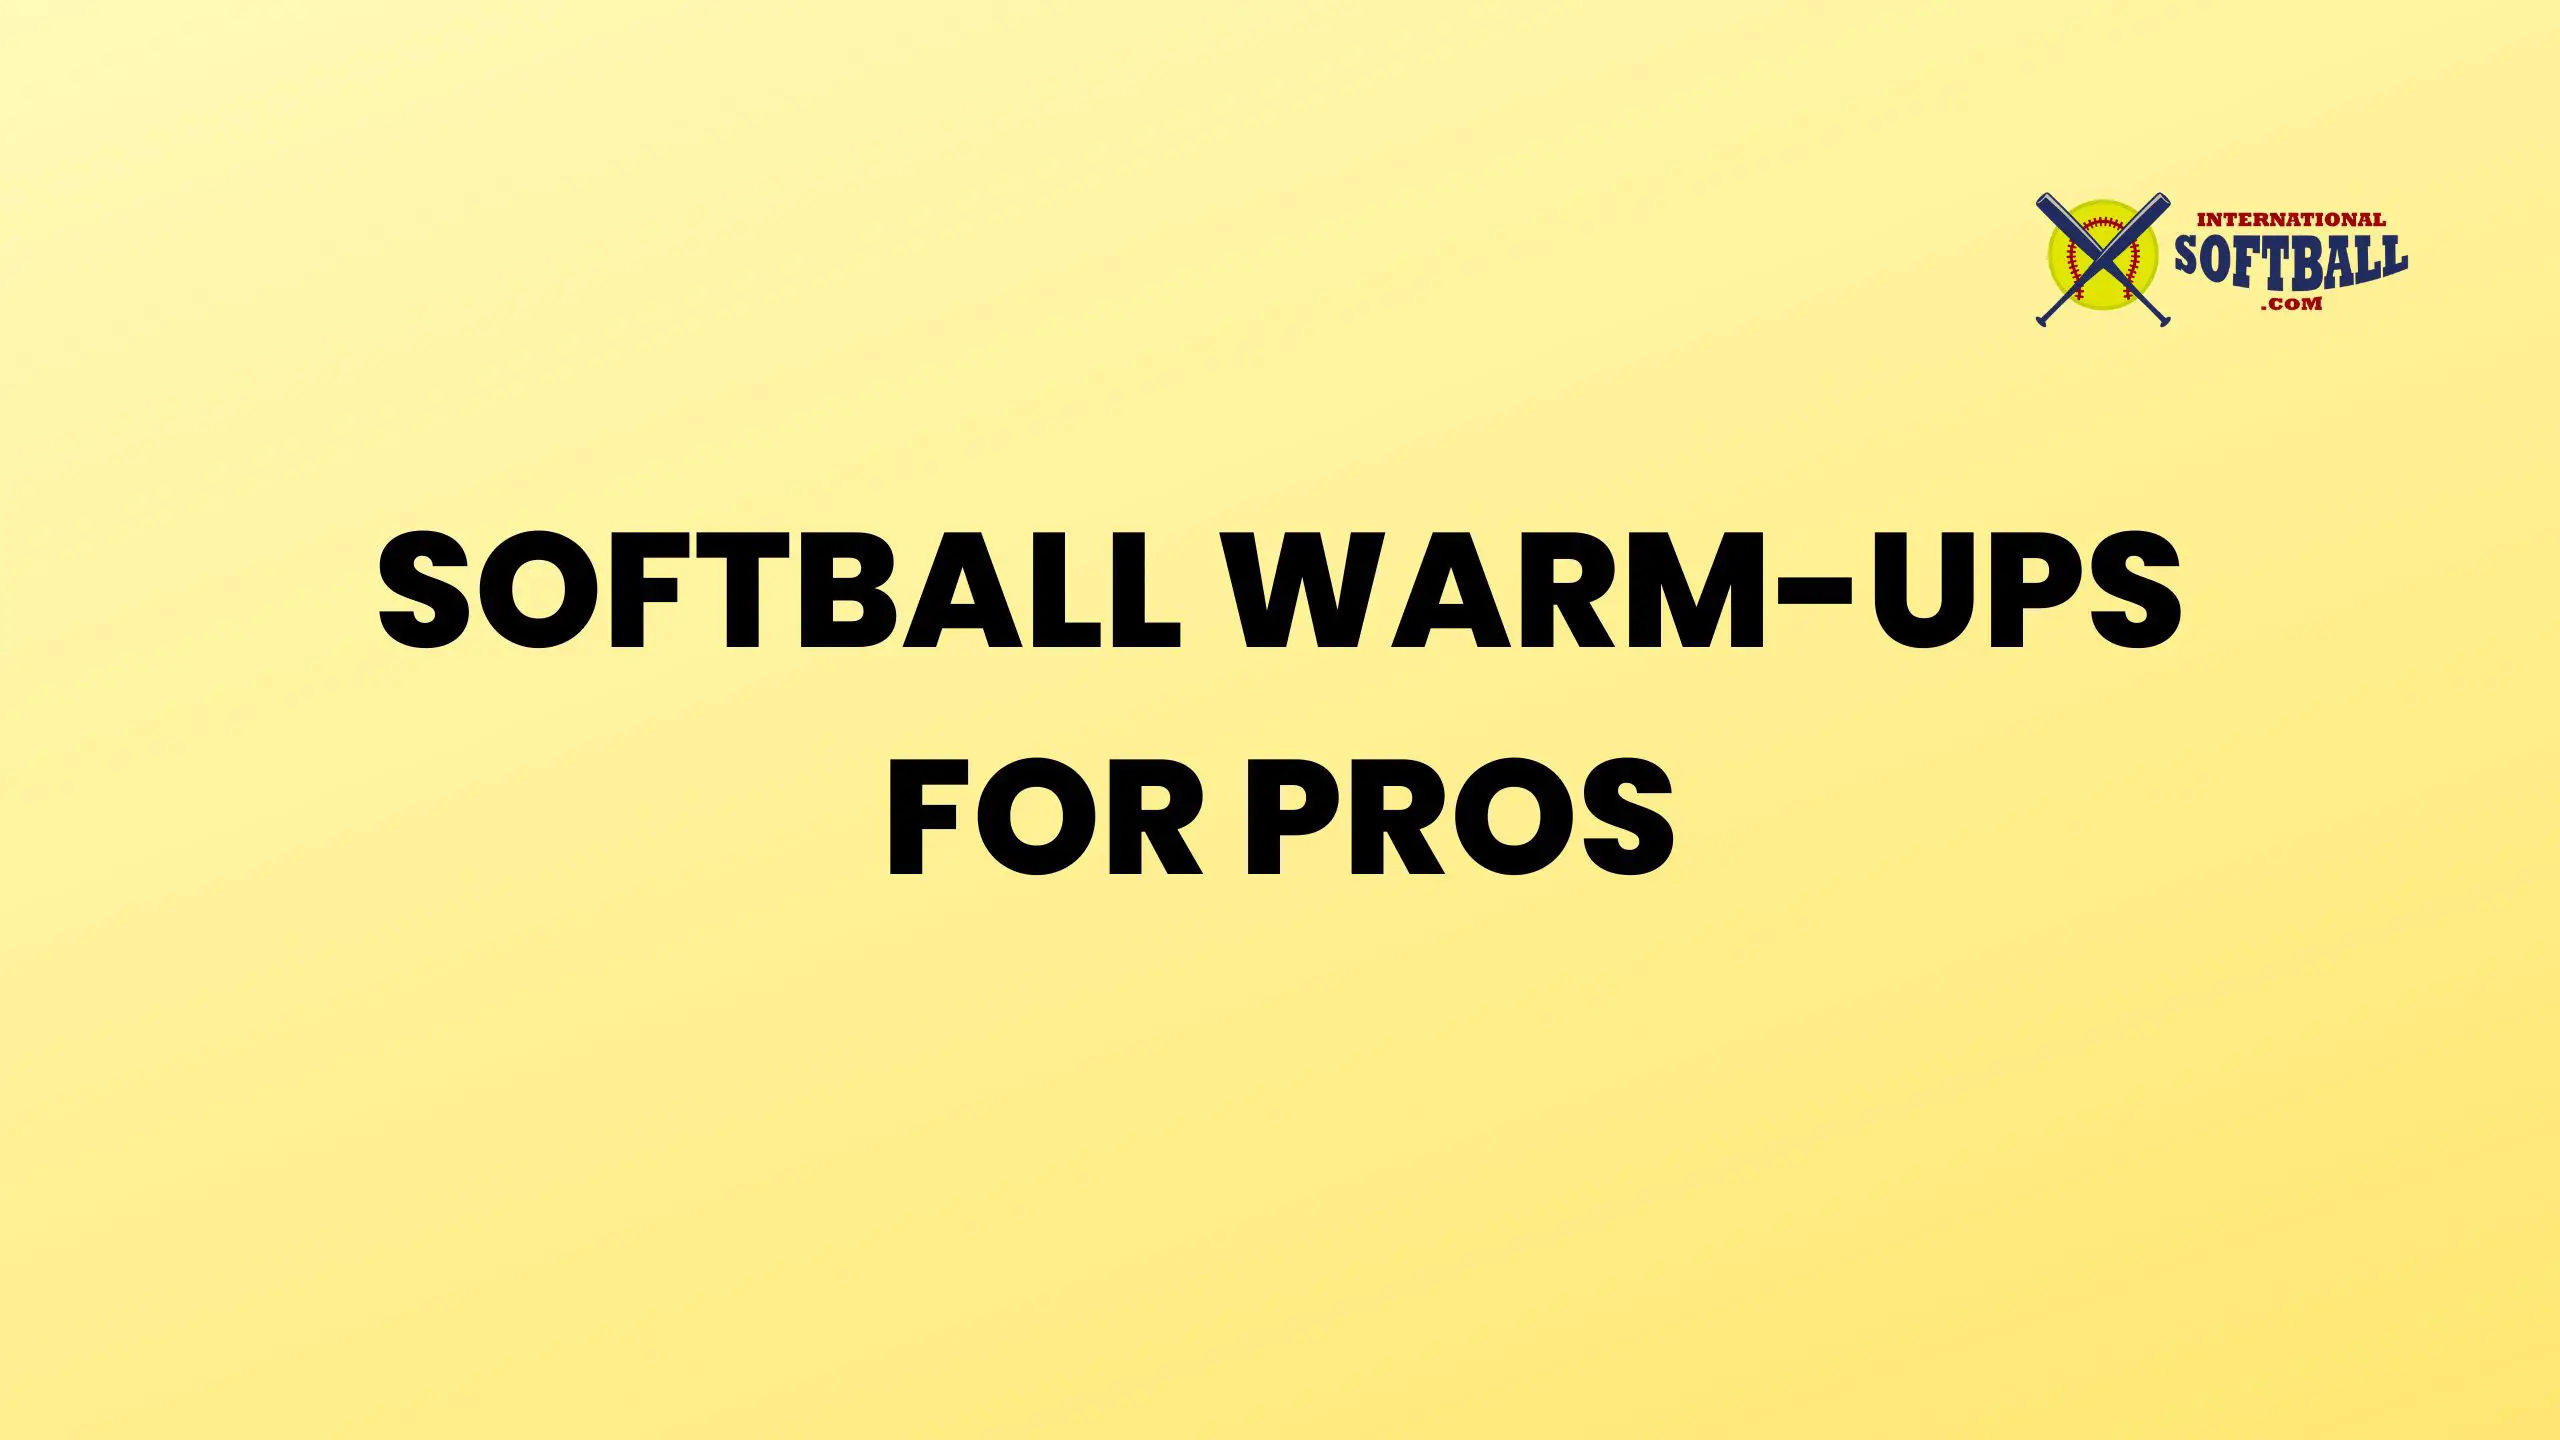 SOFTBALL WARM-UPS FOR PROS